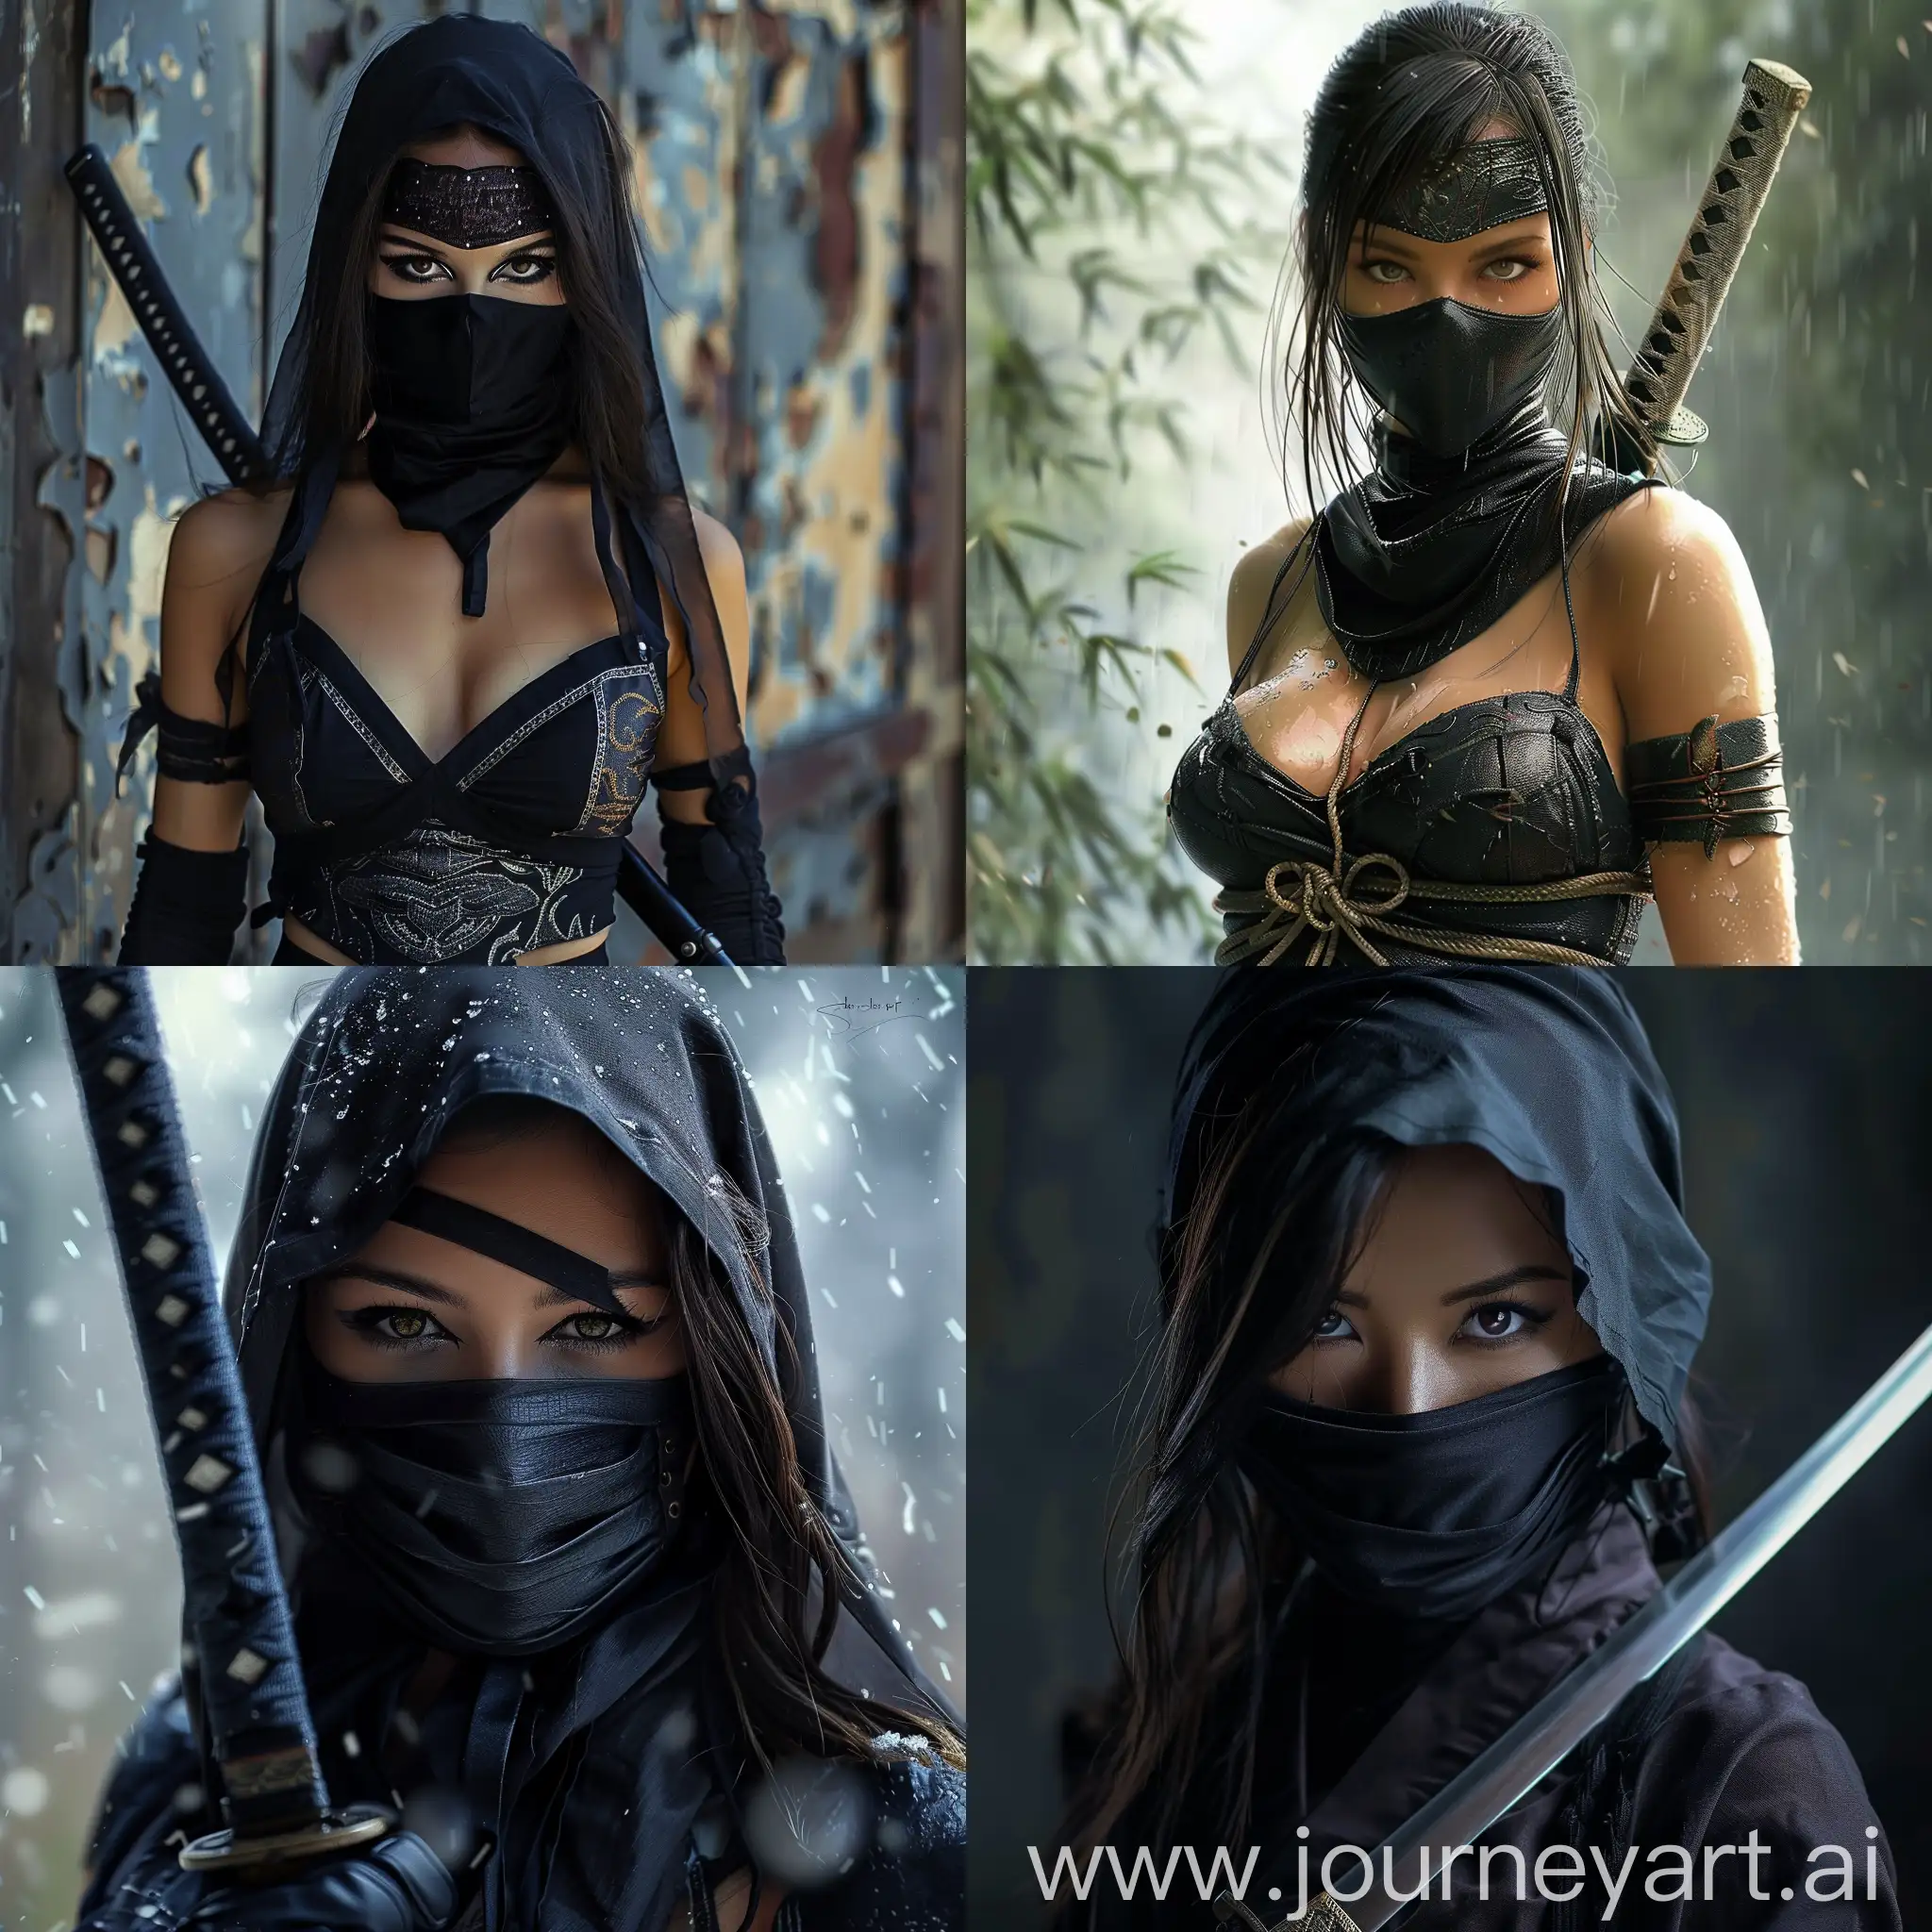 Elegant-Ninja-Woman-in-Mesmerizing-Artistic-Display